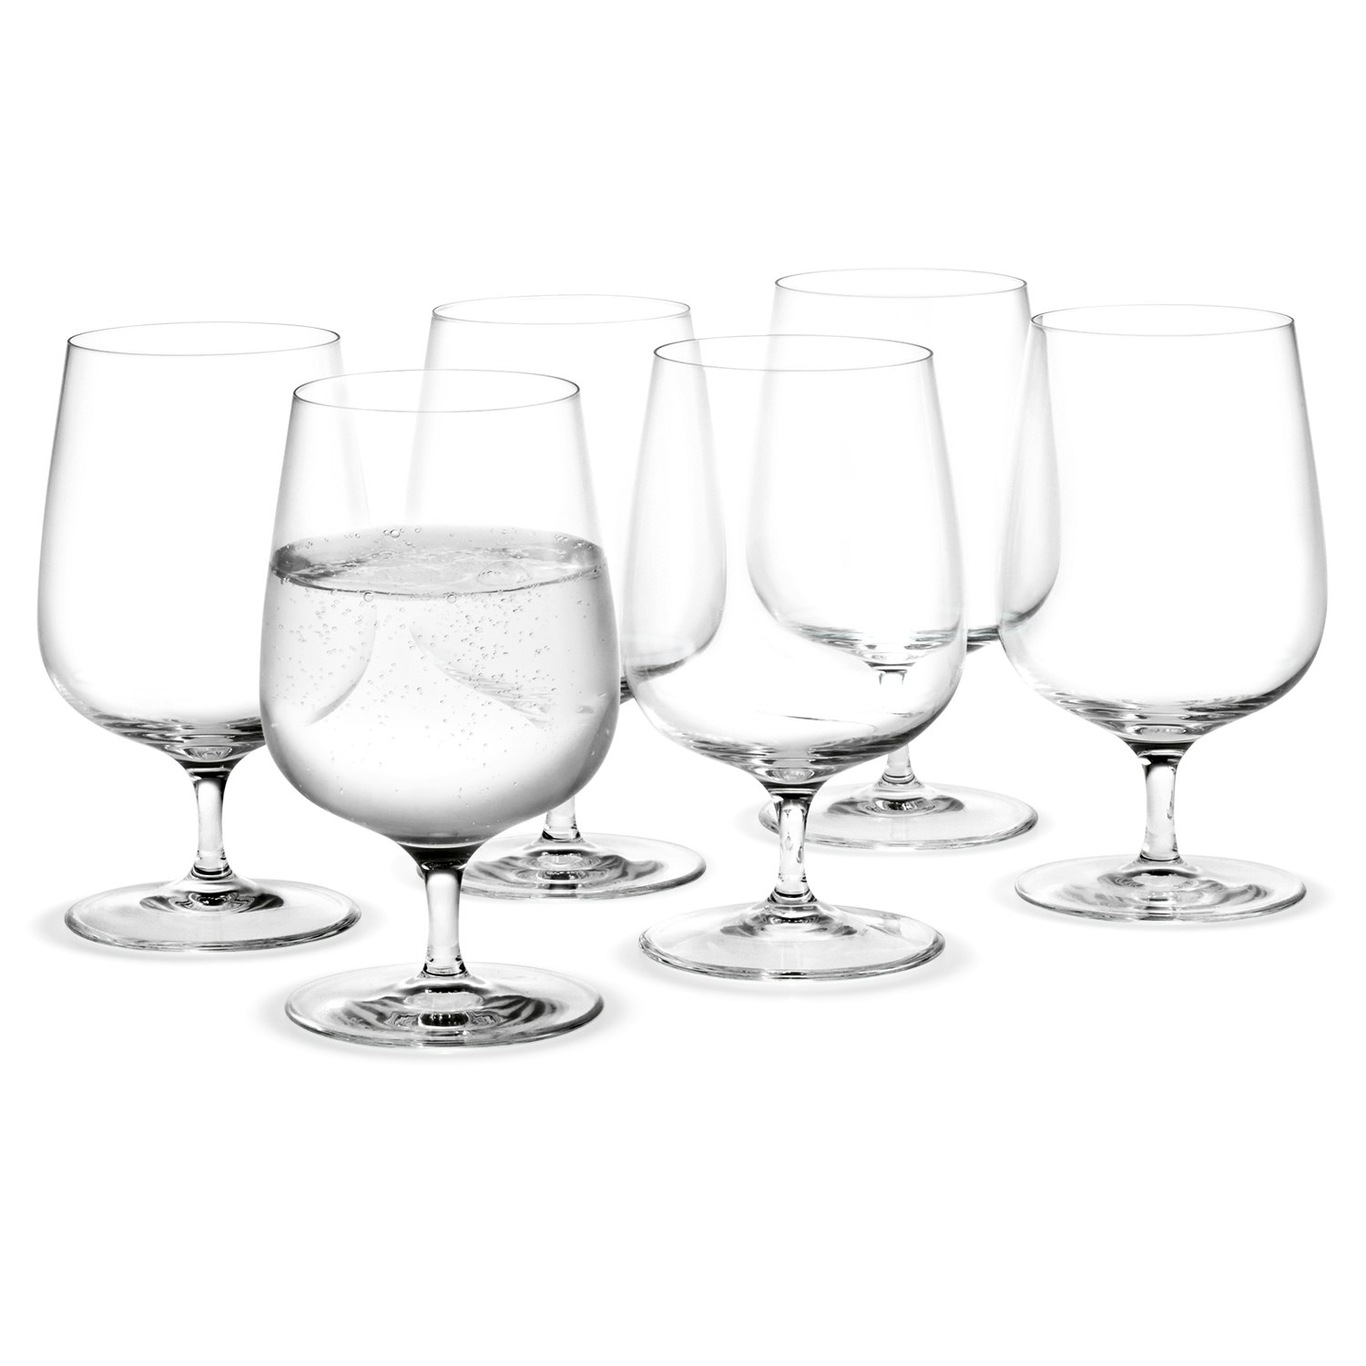 https://royaldesign.com/image/2/holmegaard-bouquet-water-glasses-6-pack-38-cl-0?w=800&quality=80